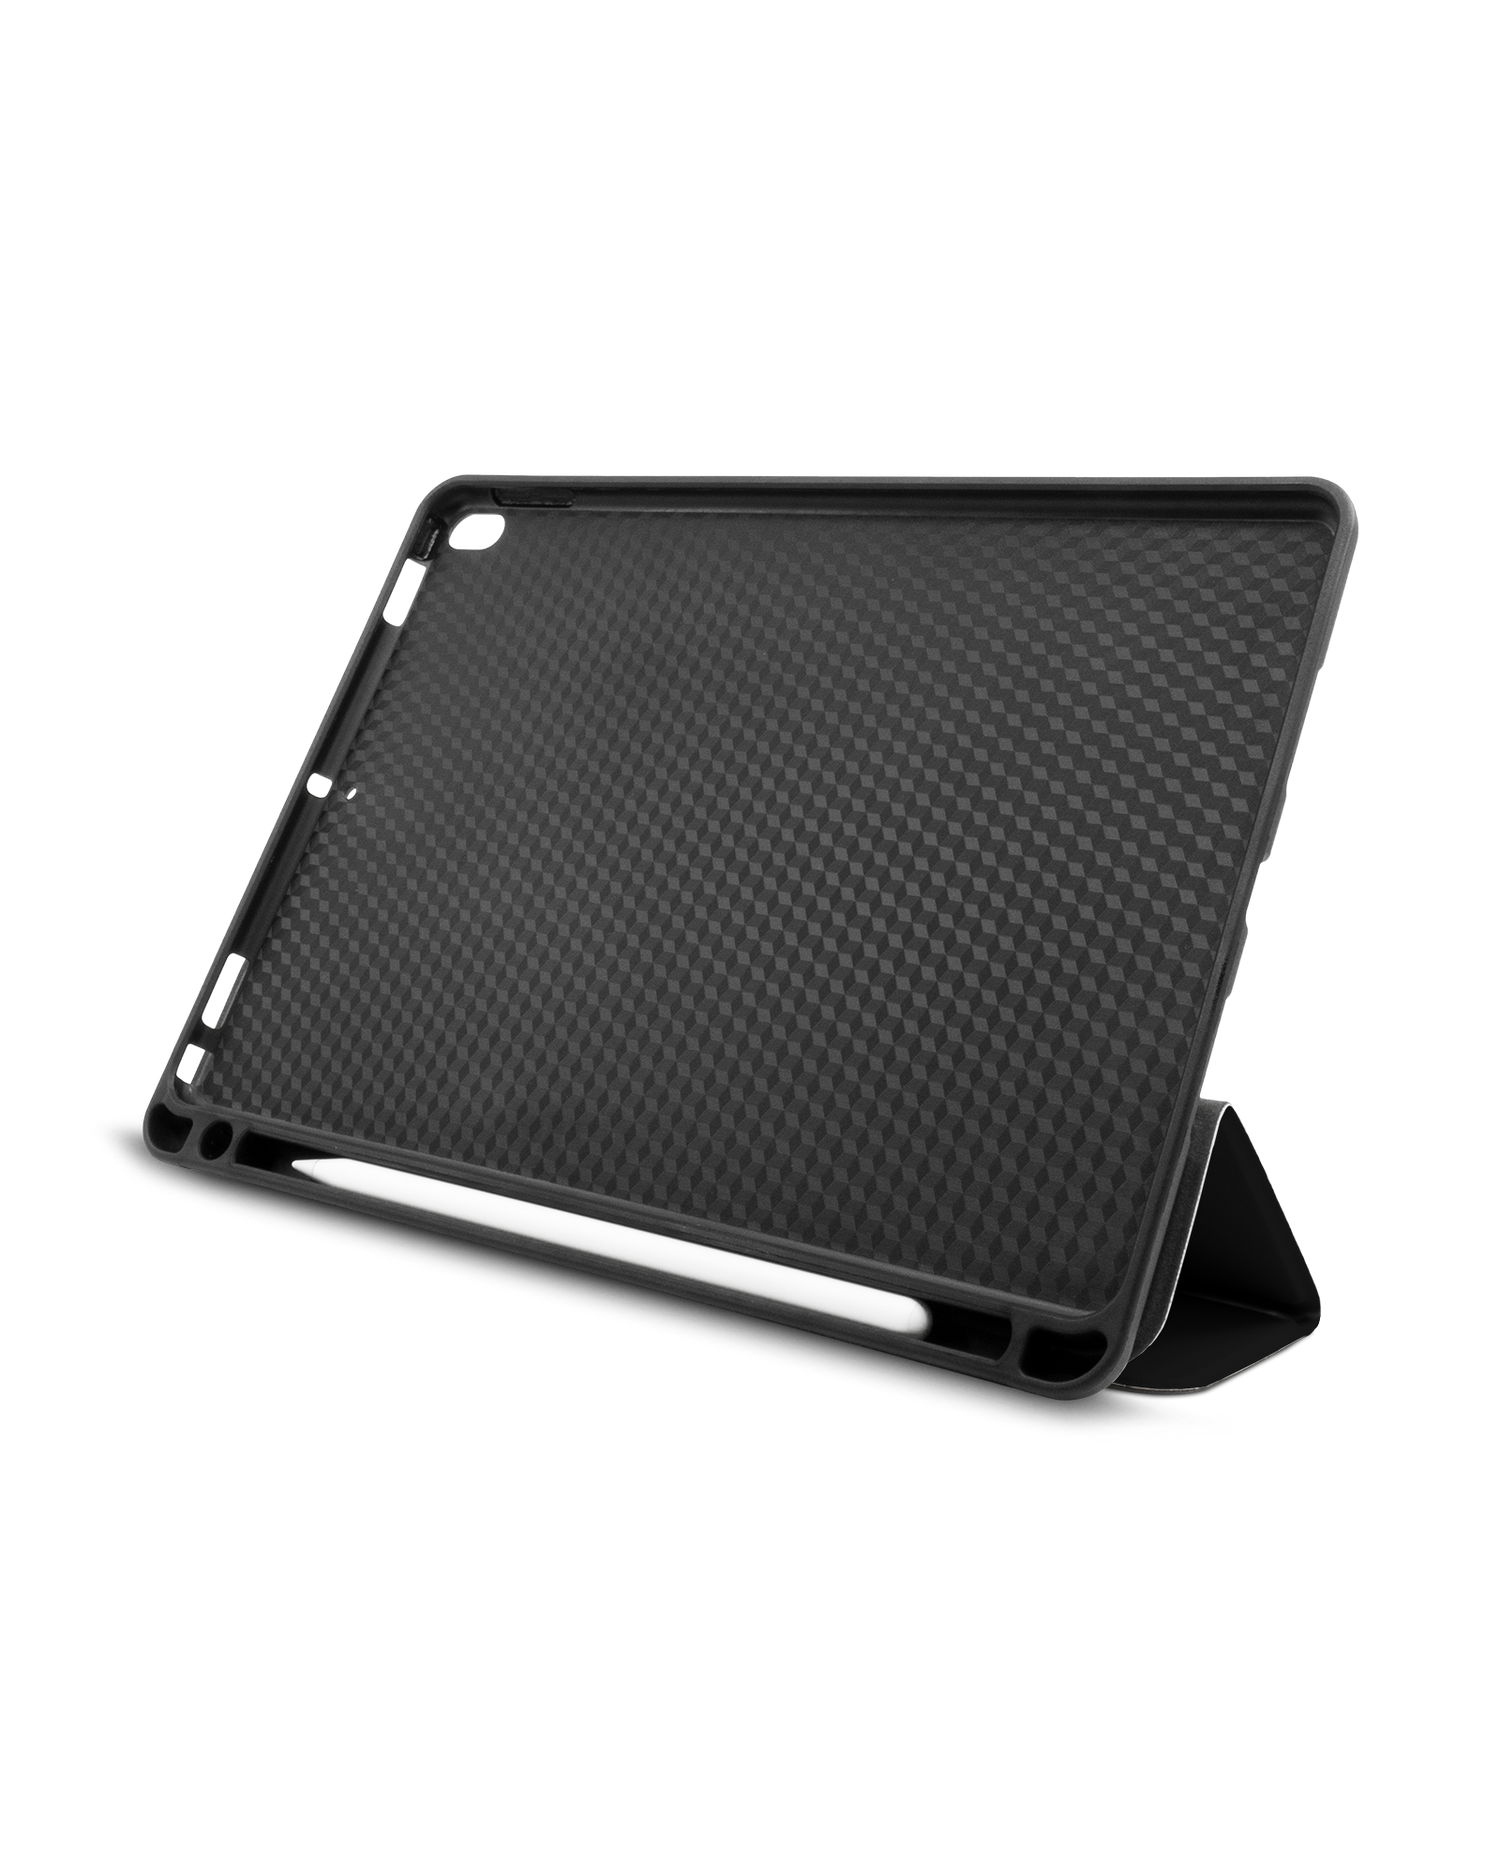 BLACK iPad Case with Pencil Holder Apple iPad Pro 10.5